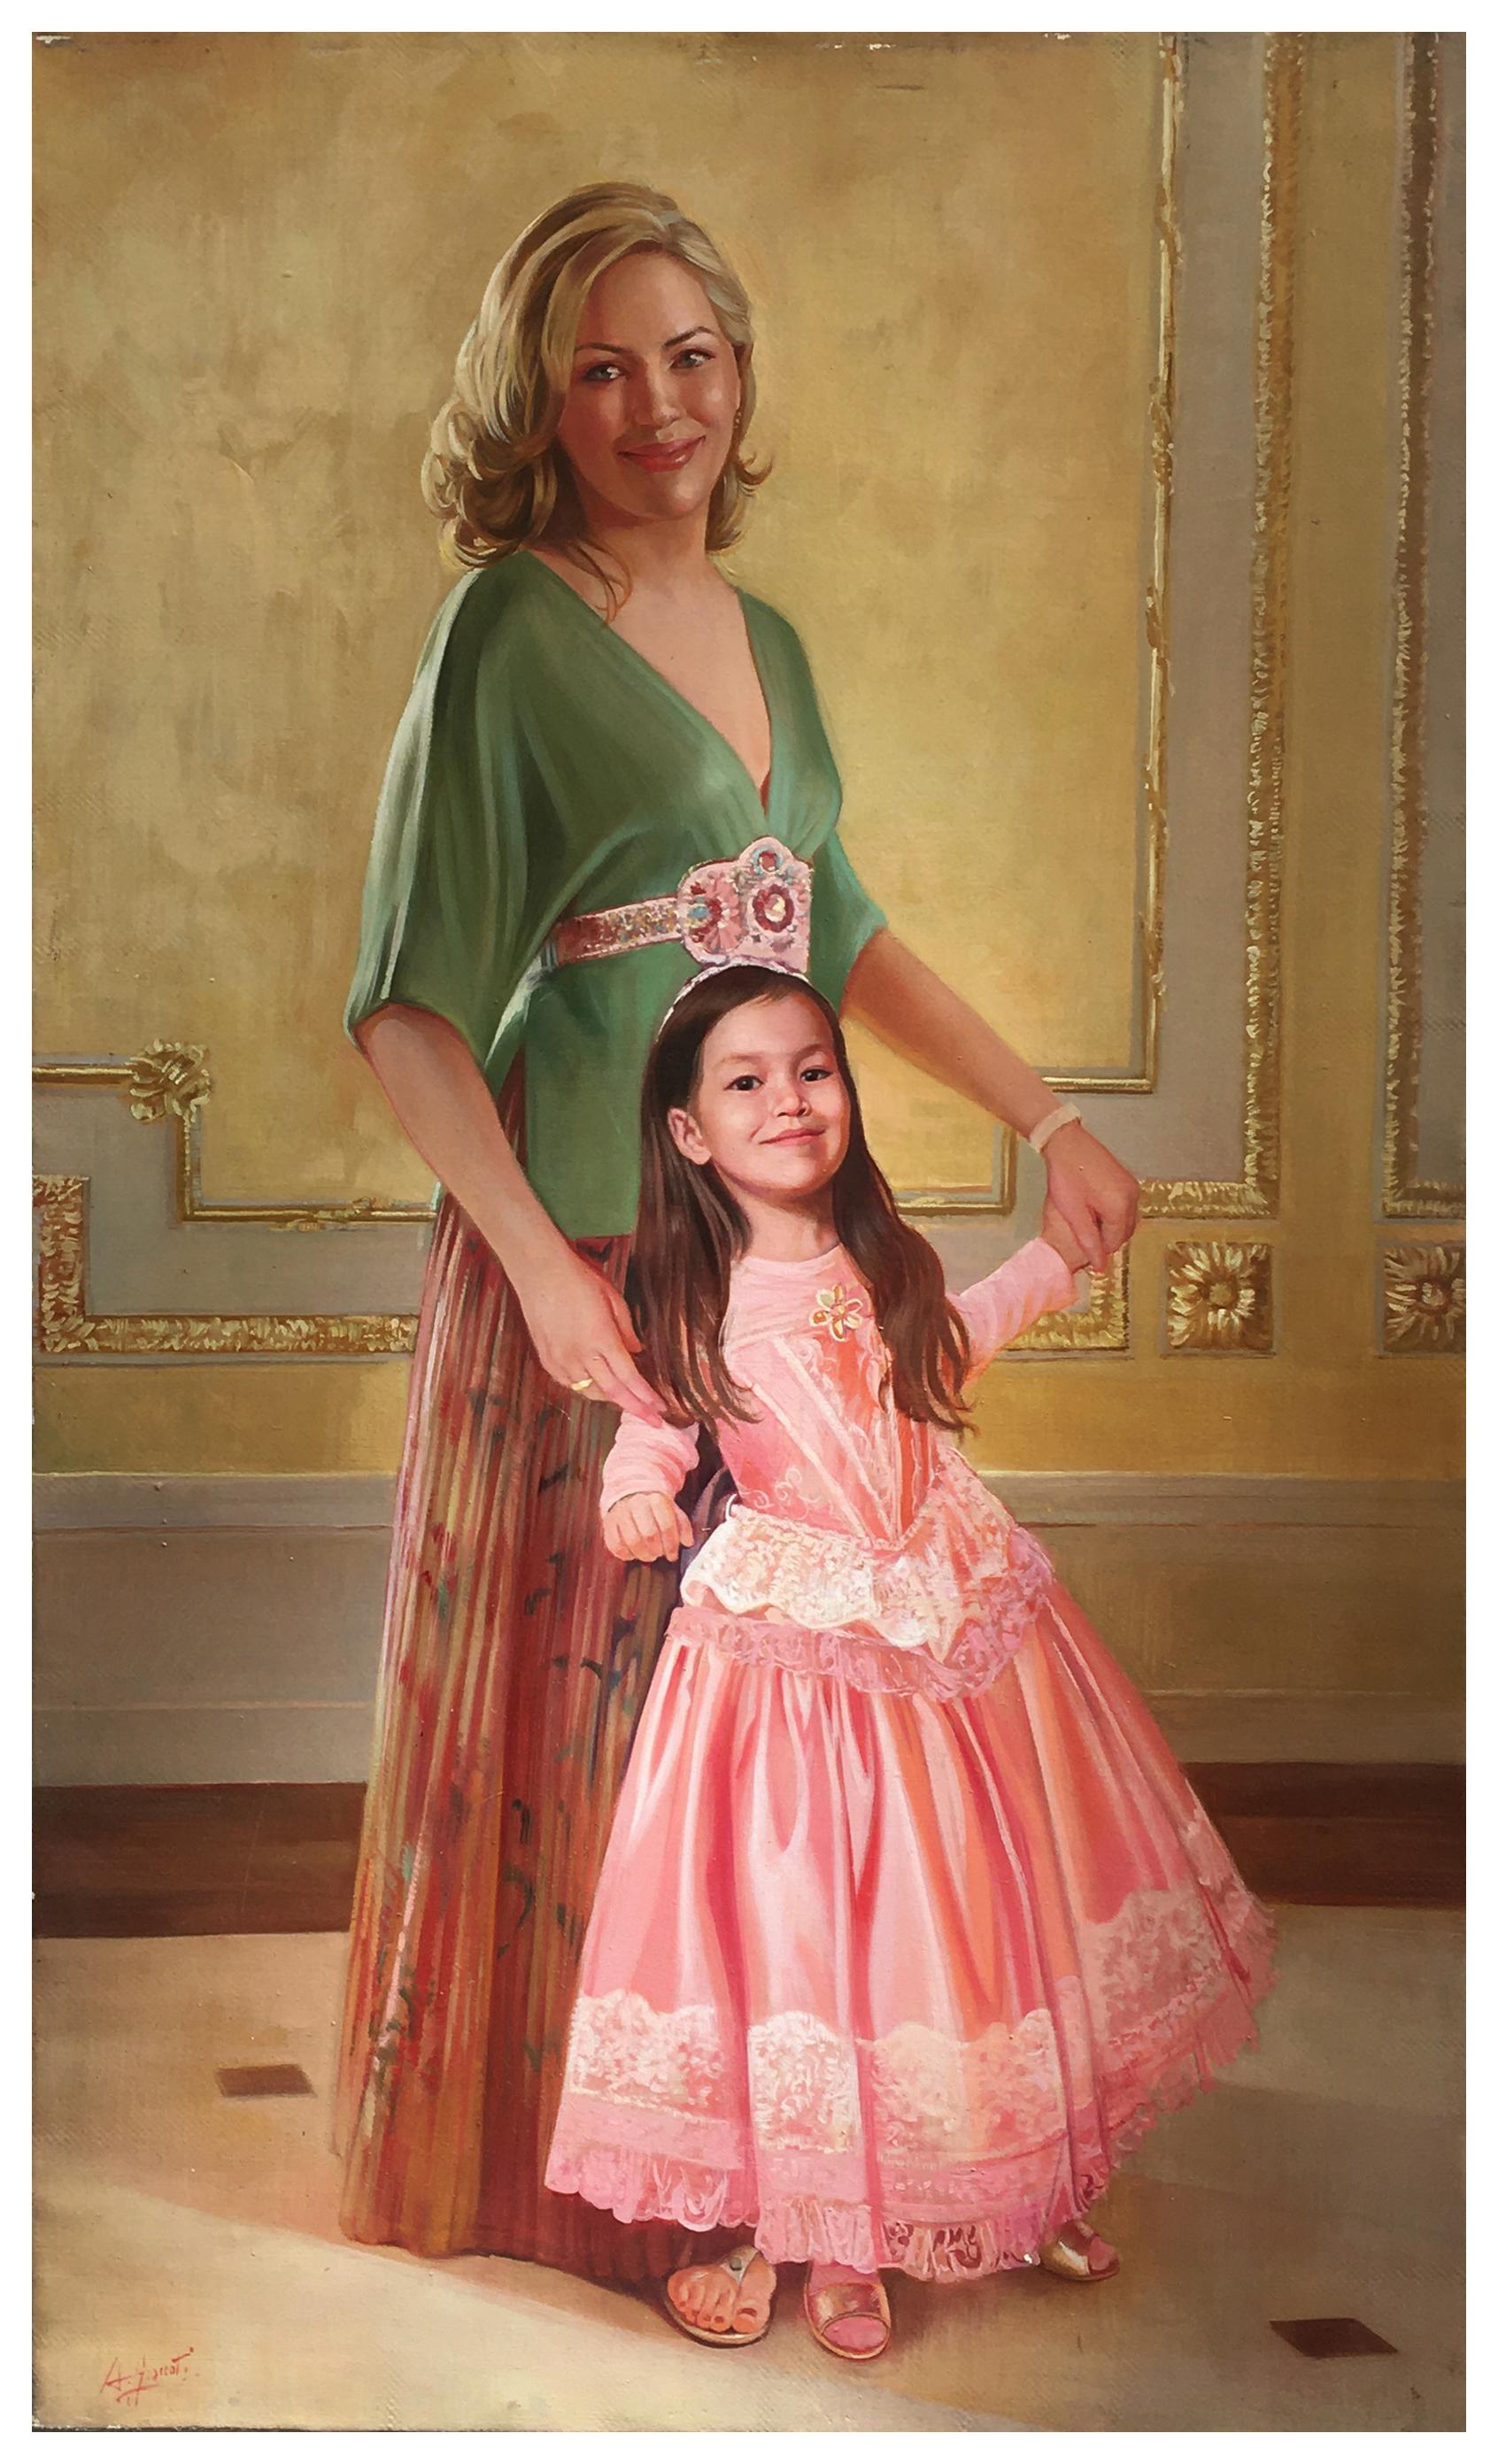 PORTRAIT OF MOTHER AND DAUGHTER - Angeo Granati - Peinture à l'huile figurative italienne - Painting de Angelo Granati